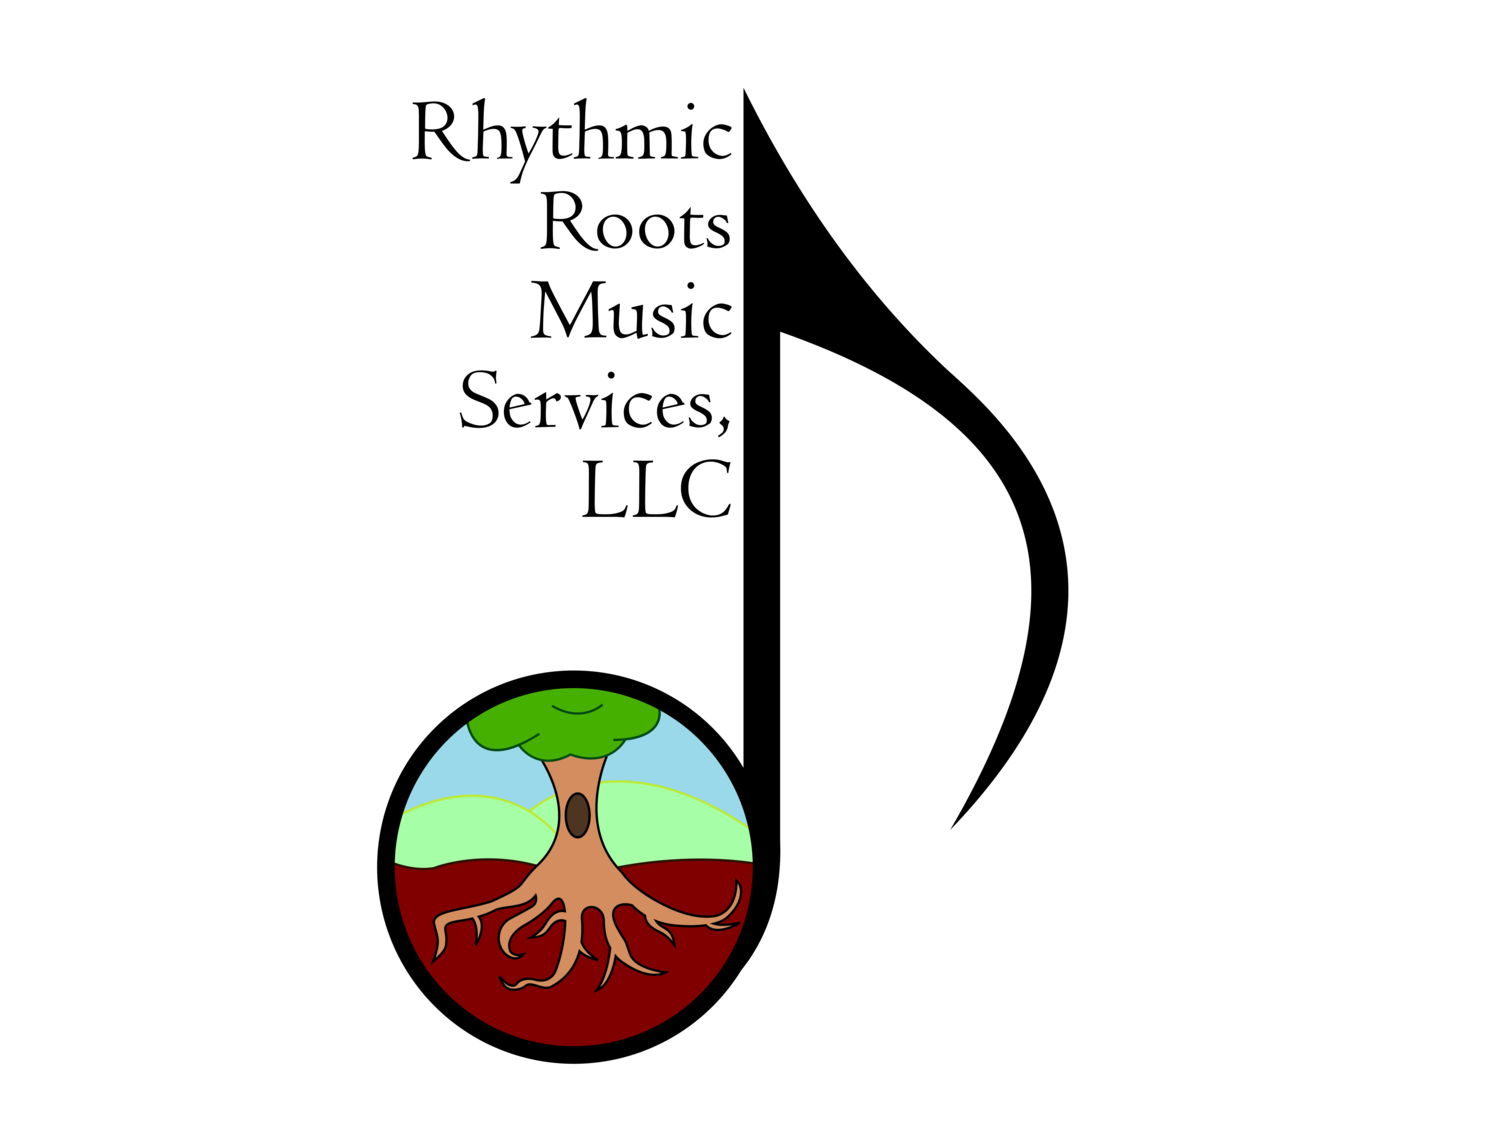 Rhythmic Roots Music Services, LLC